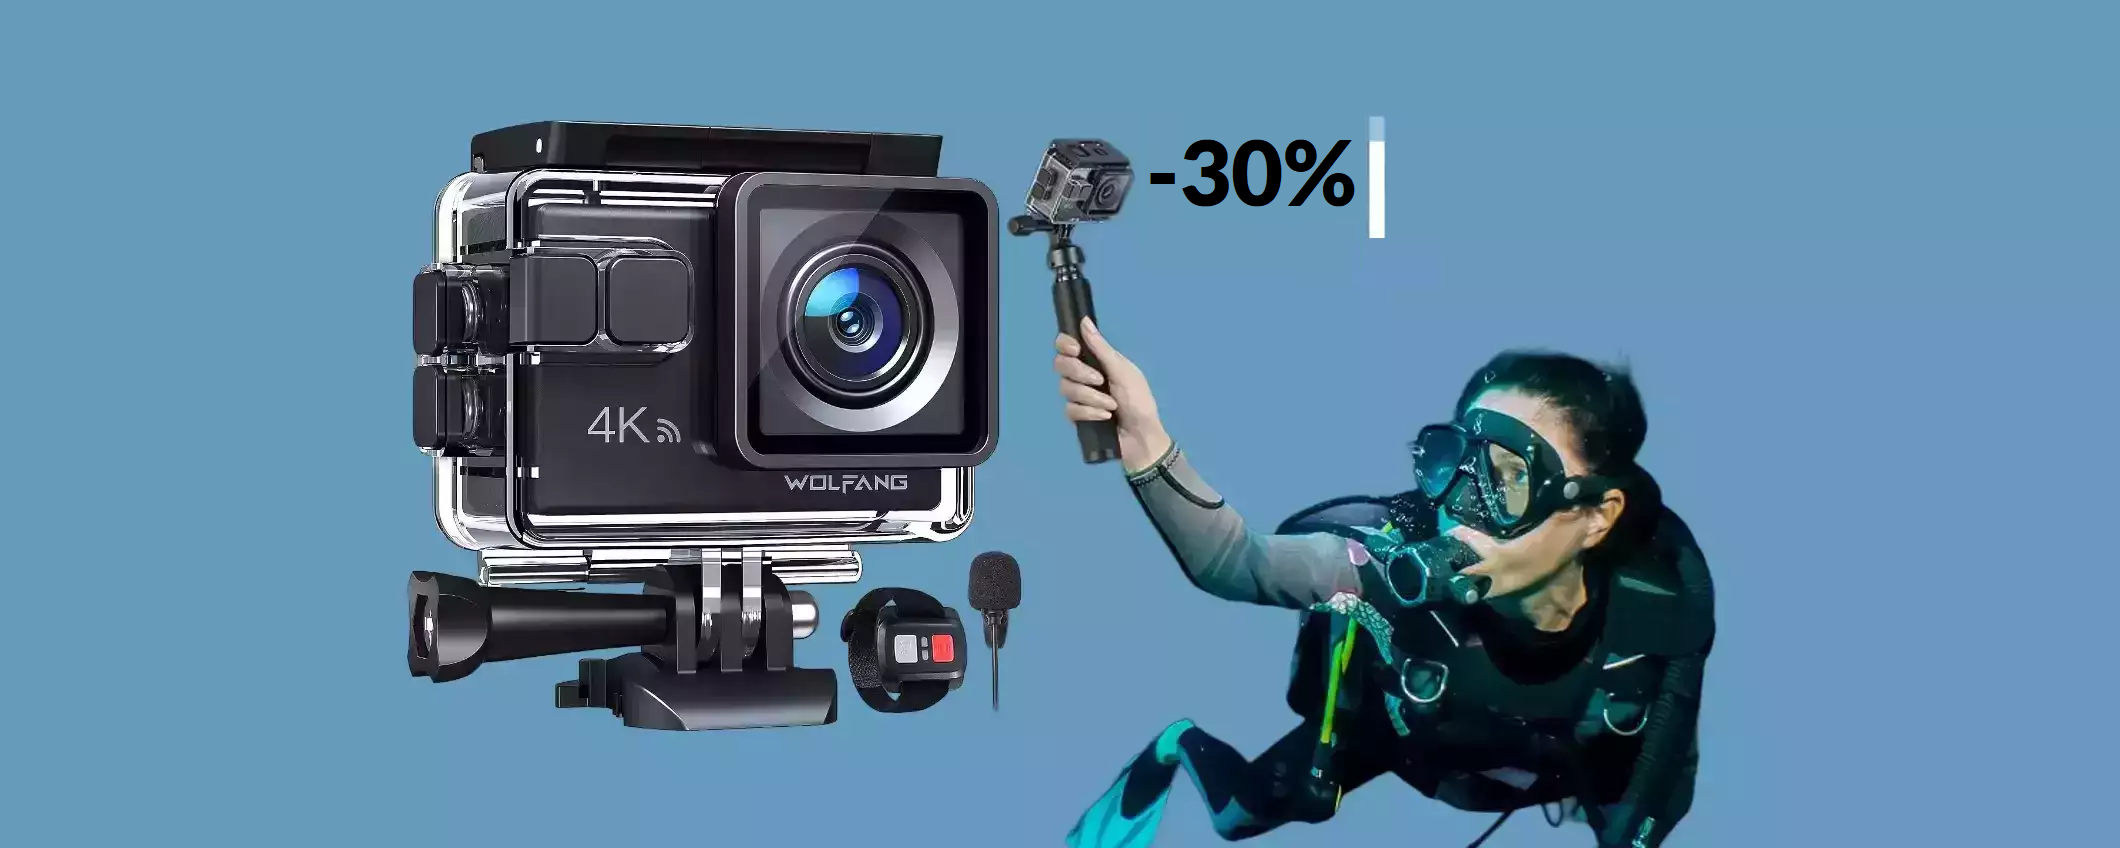 Action cam 4K per foto e video SPETTACOLARI: best buy a 48€